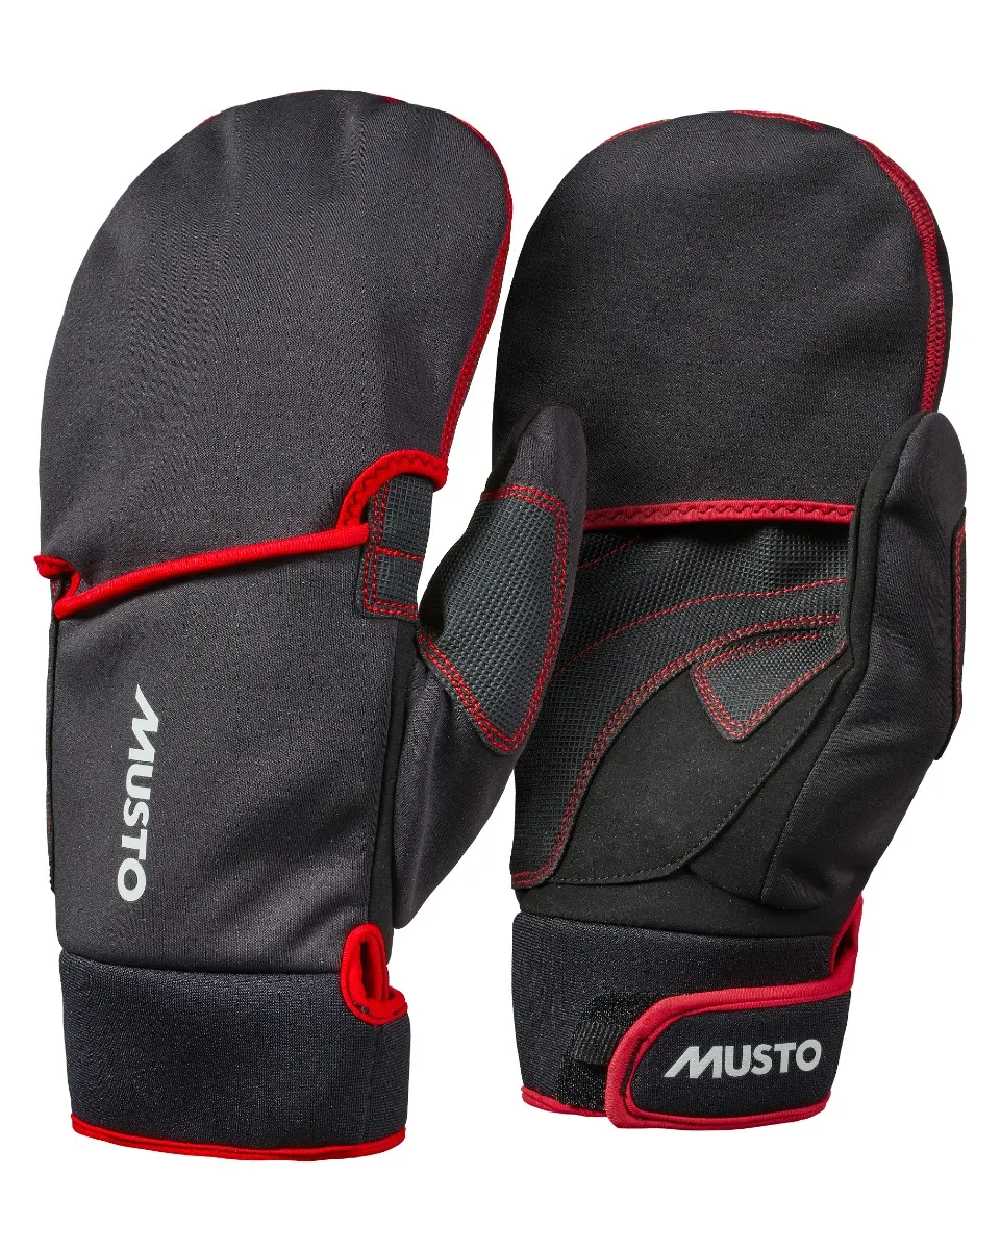 Musto Performance Winter Gloves 2.0 in Black